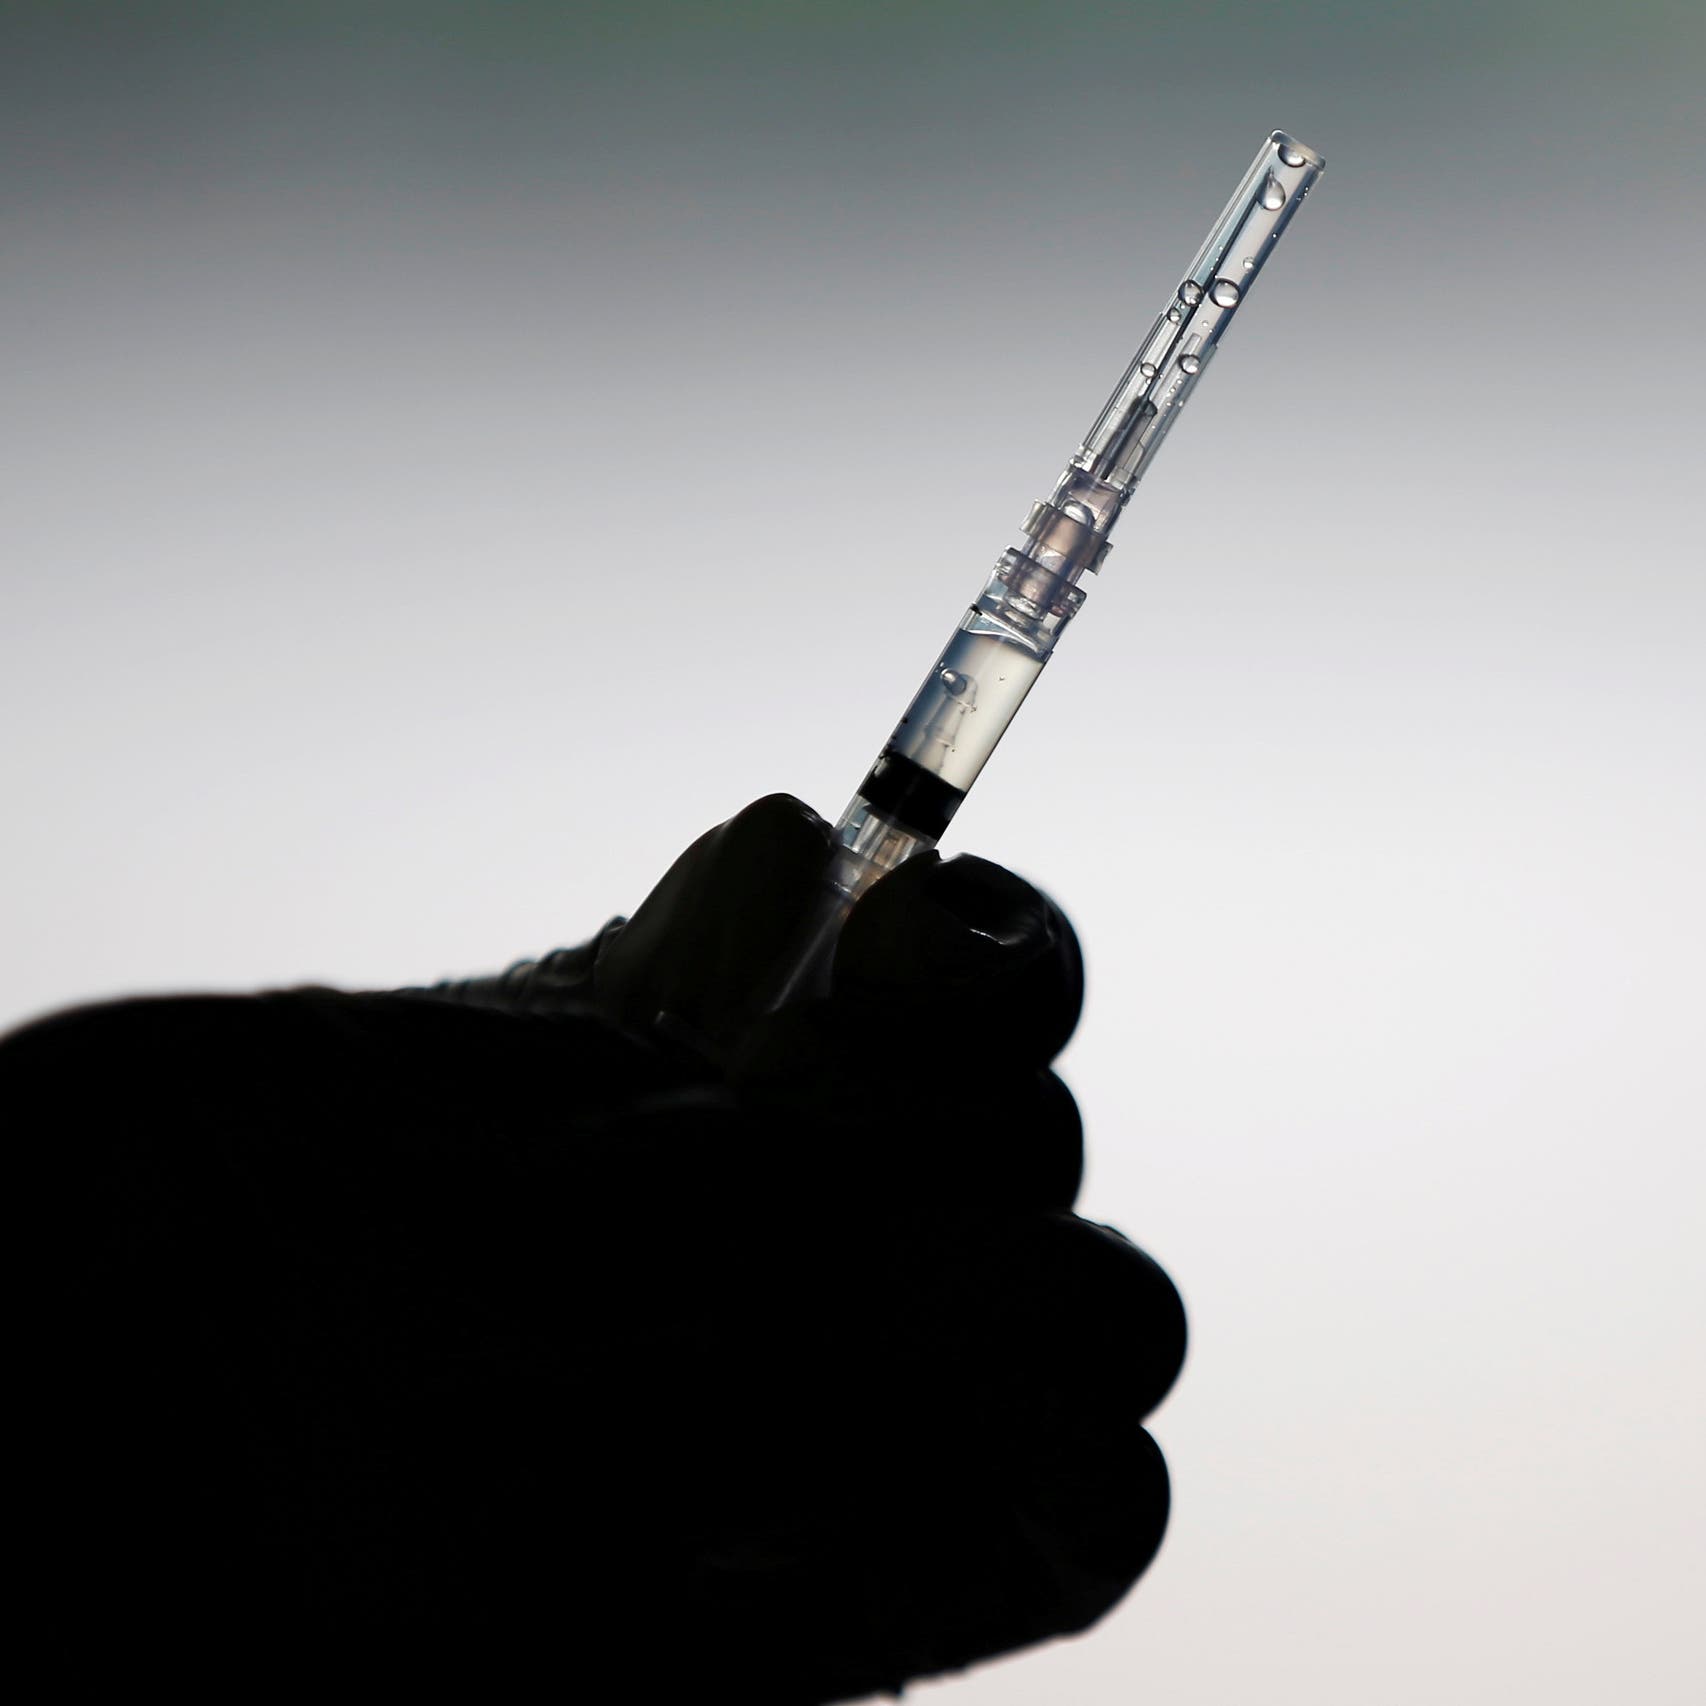 Friends of conspiracy believers may help reduce vaccine hesitancy: Study